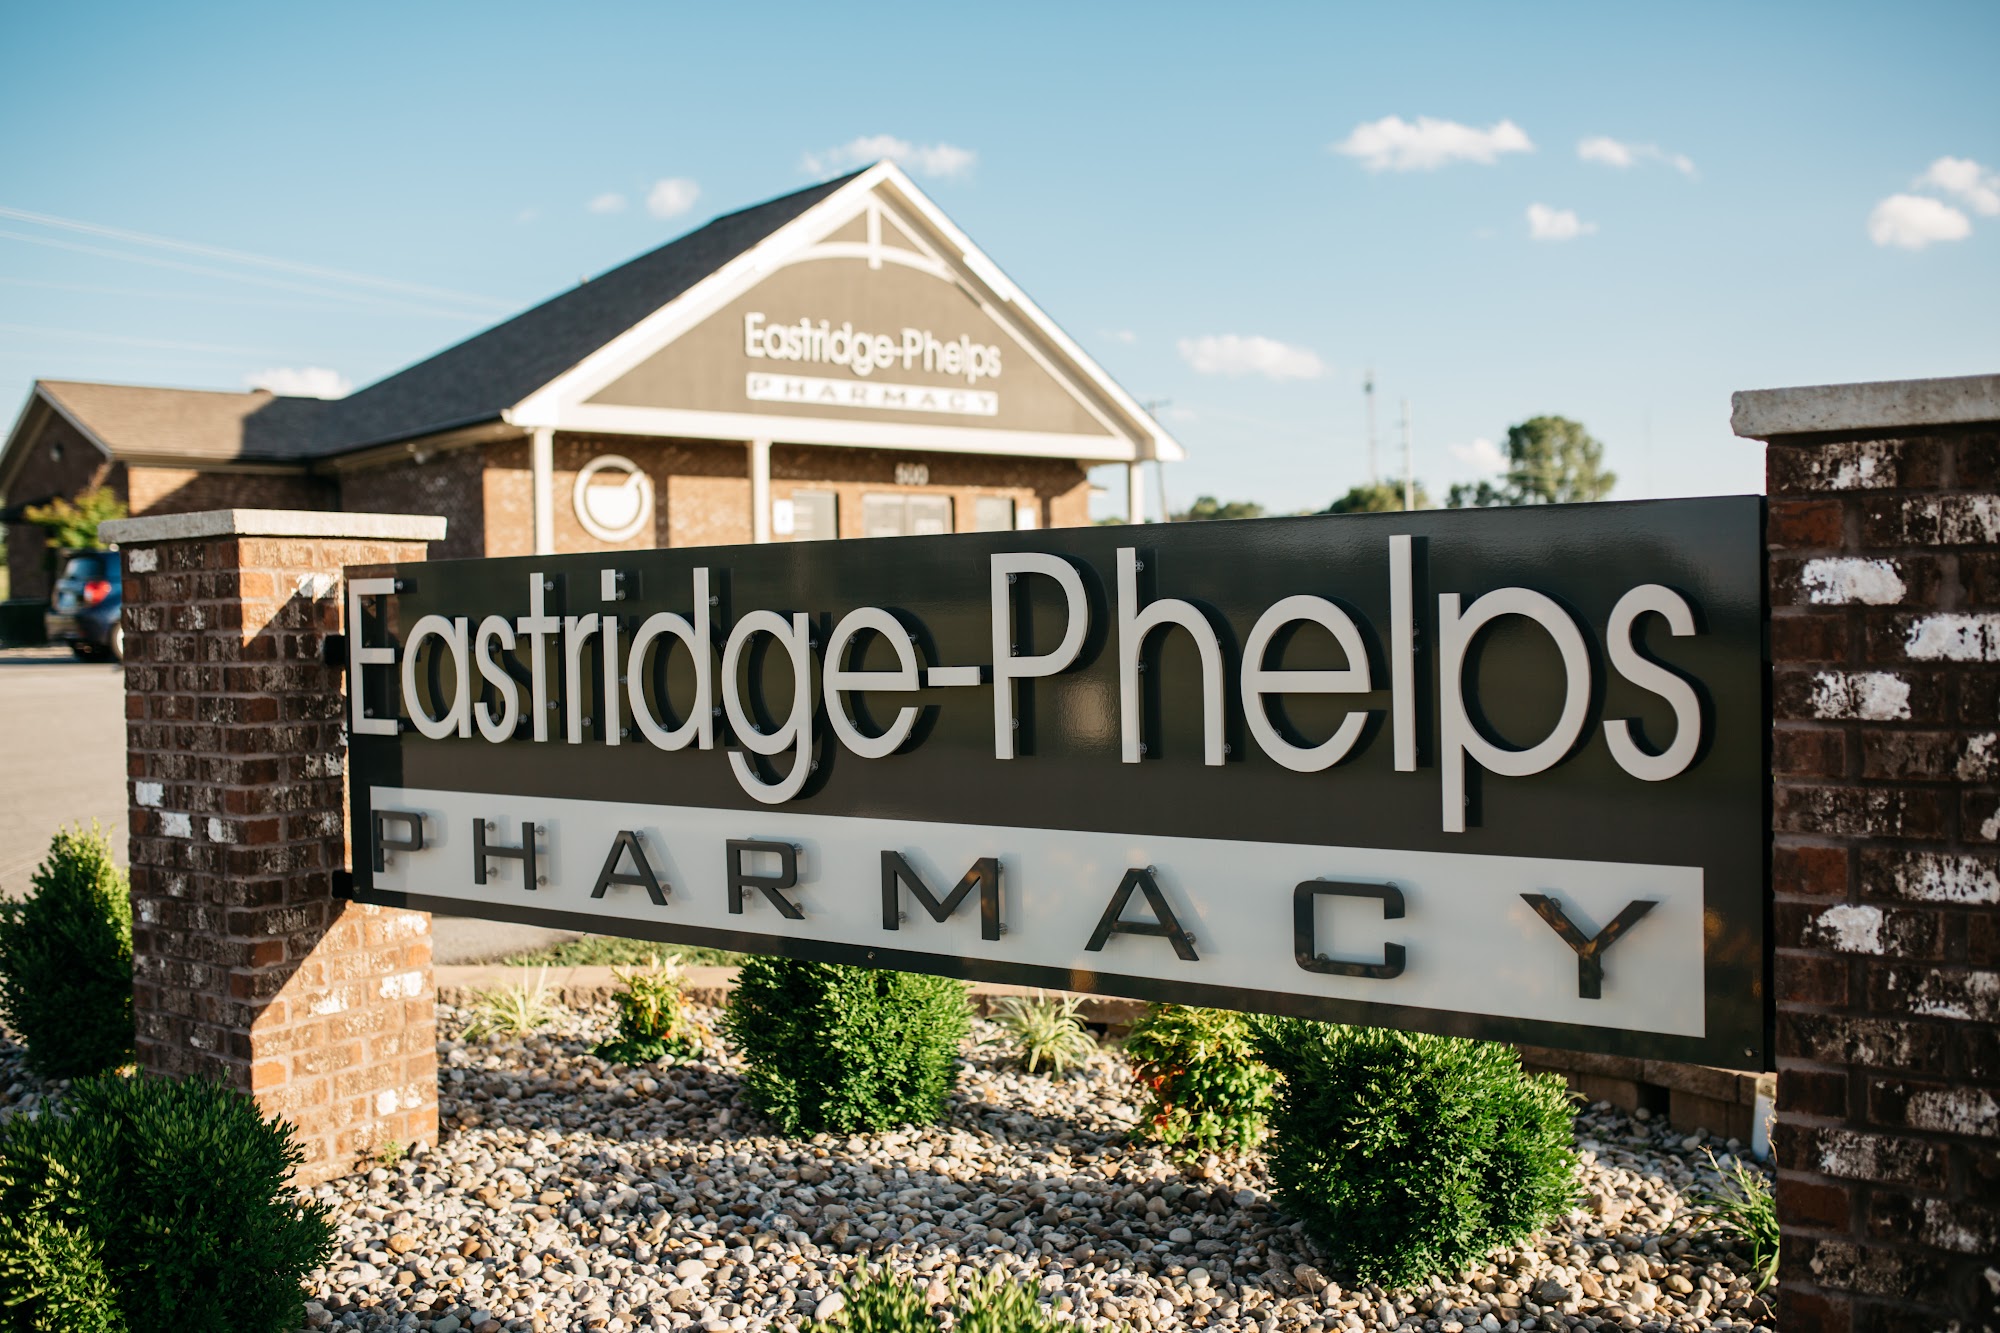 Eastridge-Phelps Pharmacy Campbellsville